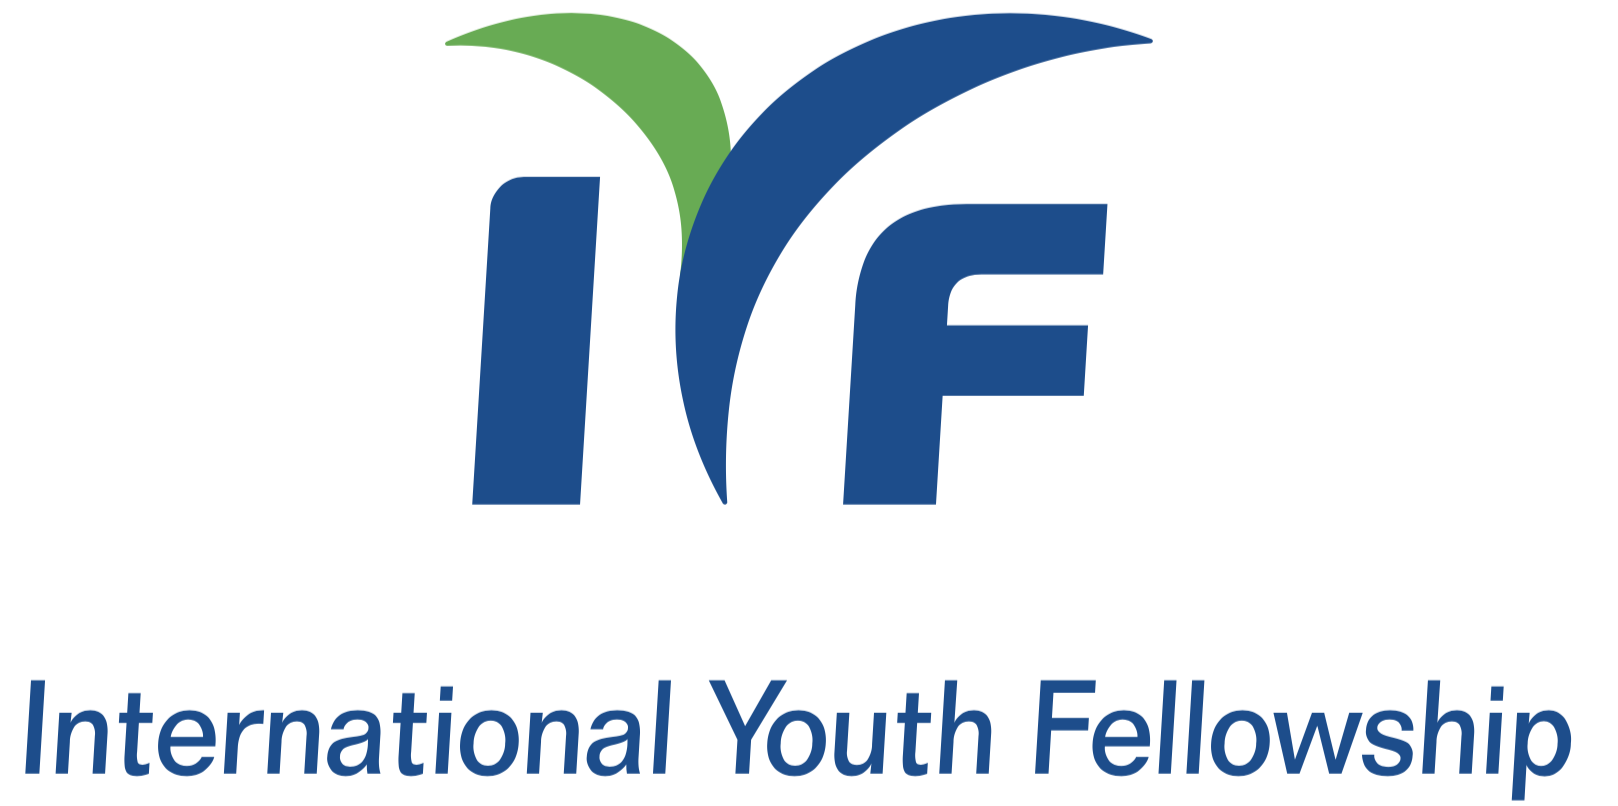 The International Youth Fellowship